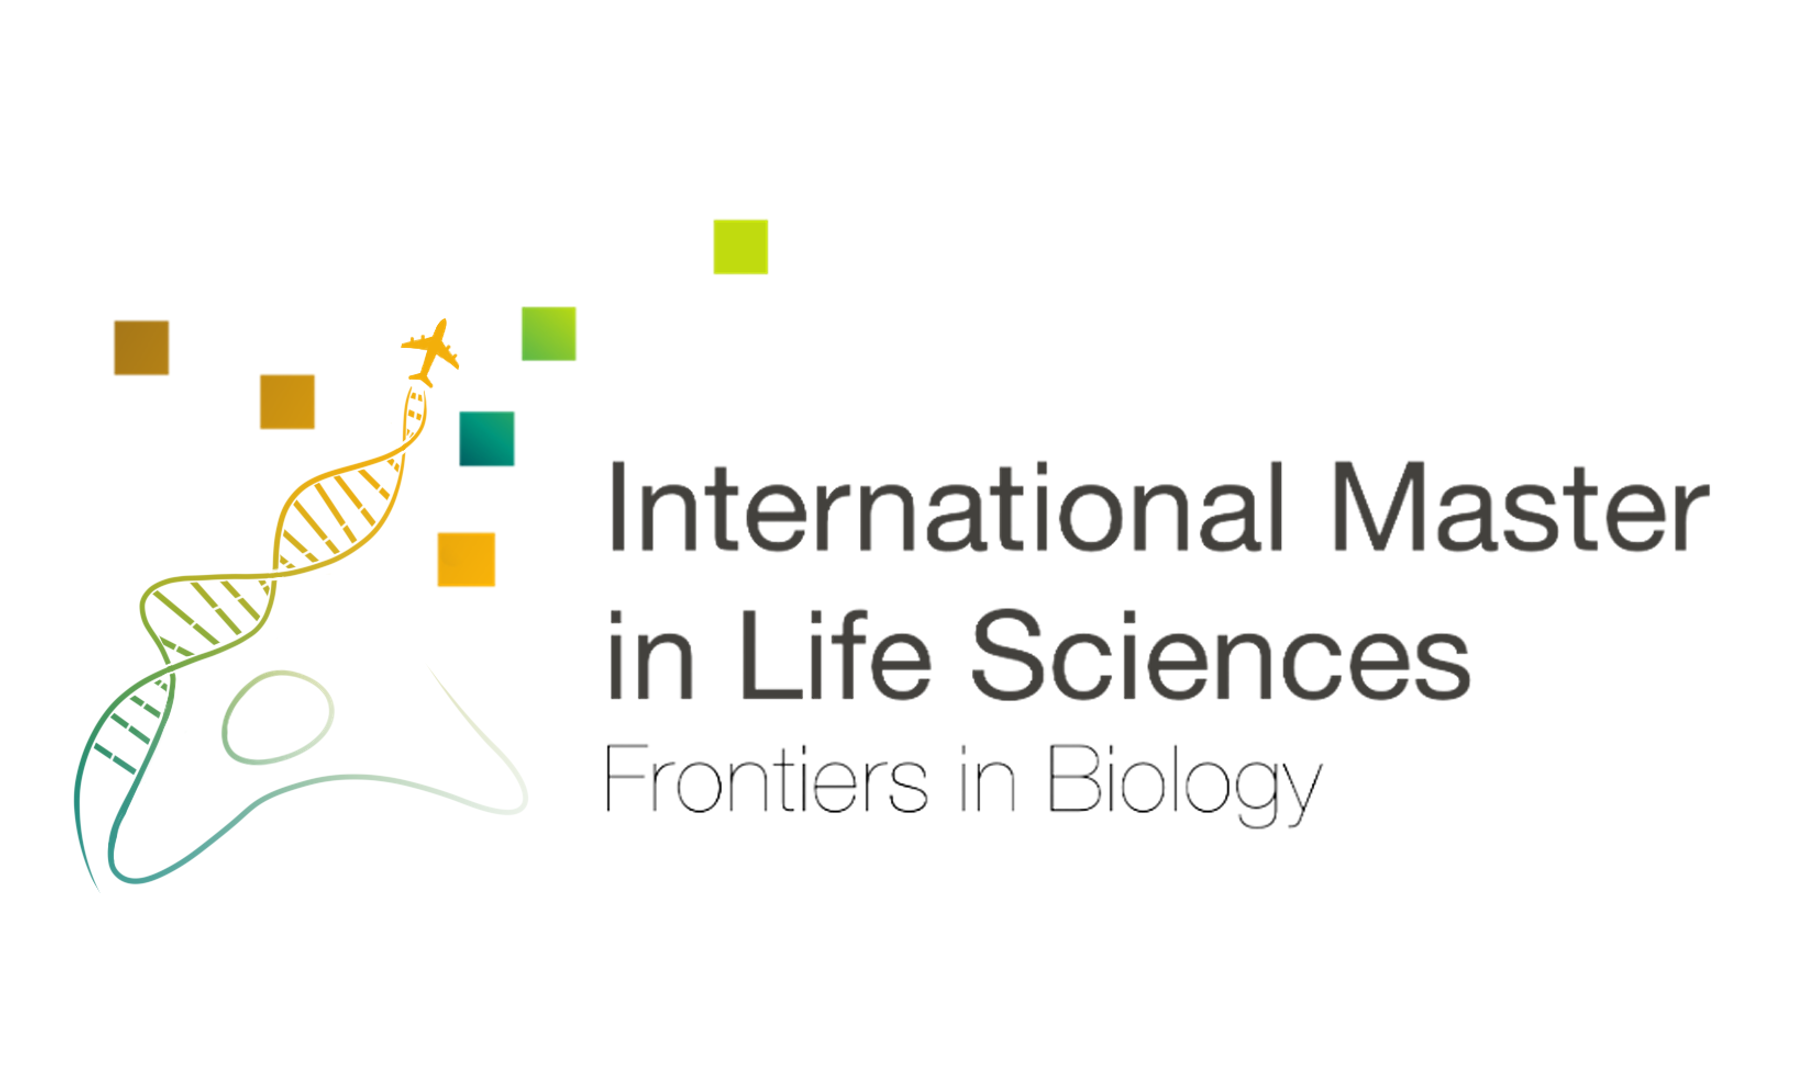  International Master in Life Sciences